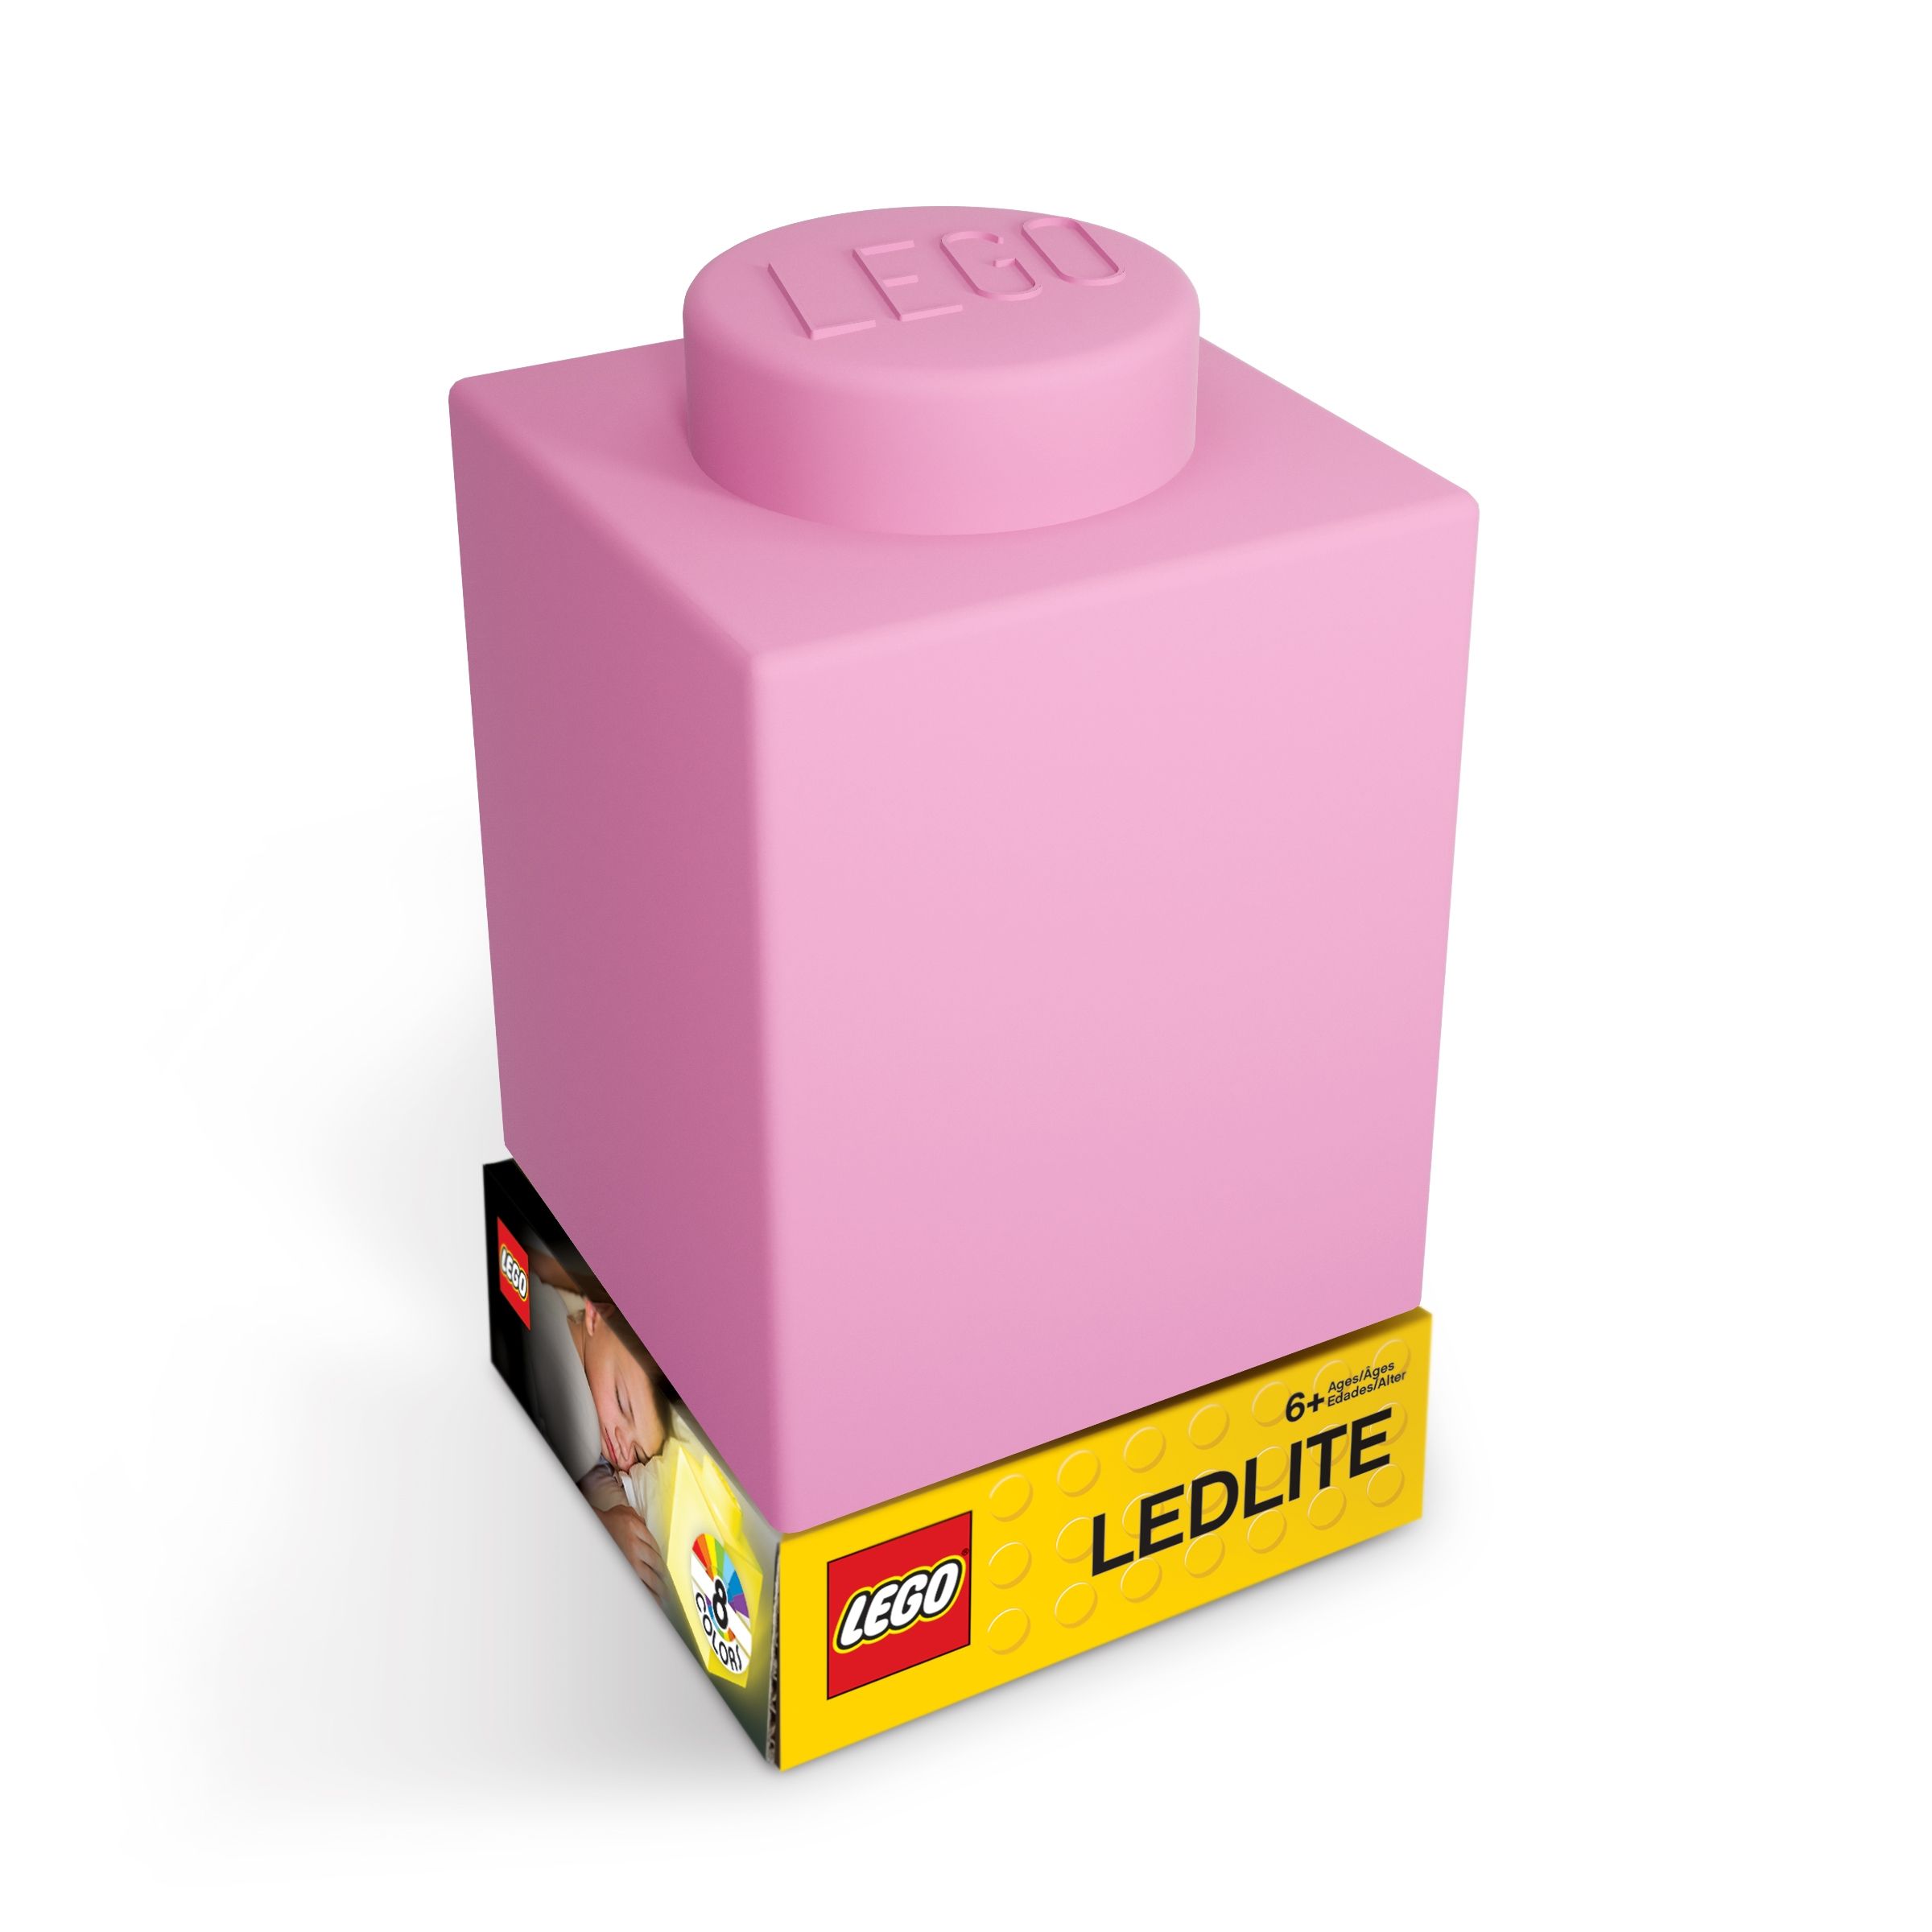 LEGO Gear 5007232 1x1 Stein-Nachtlicht – Rosa LEGO_5007232_alt1.jpg